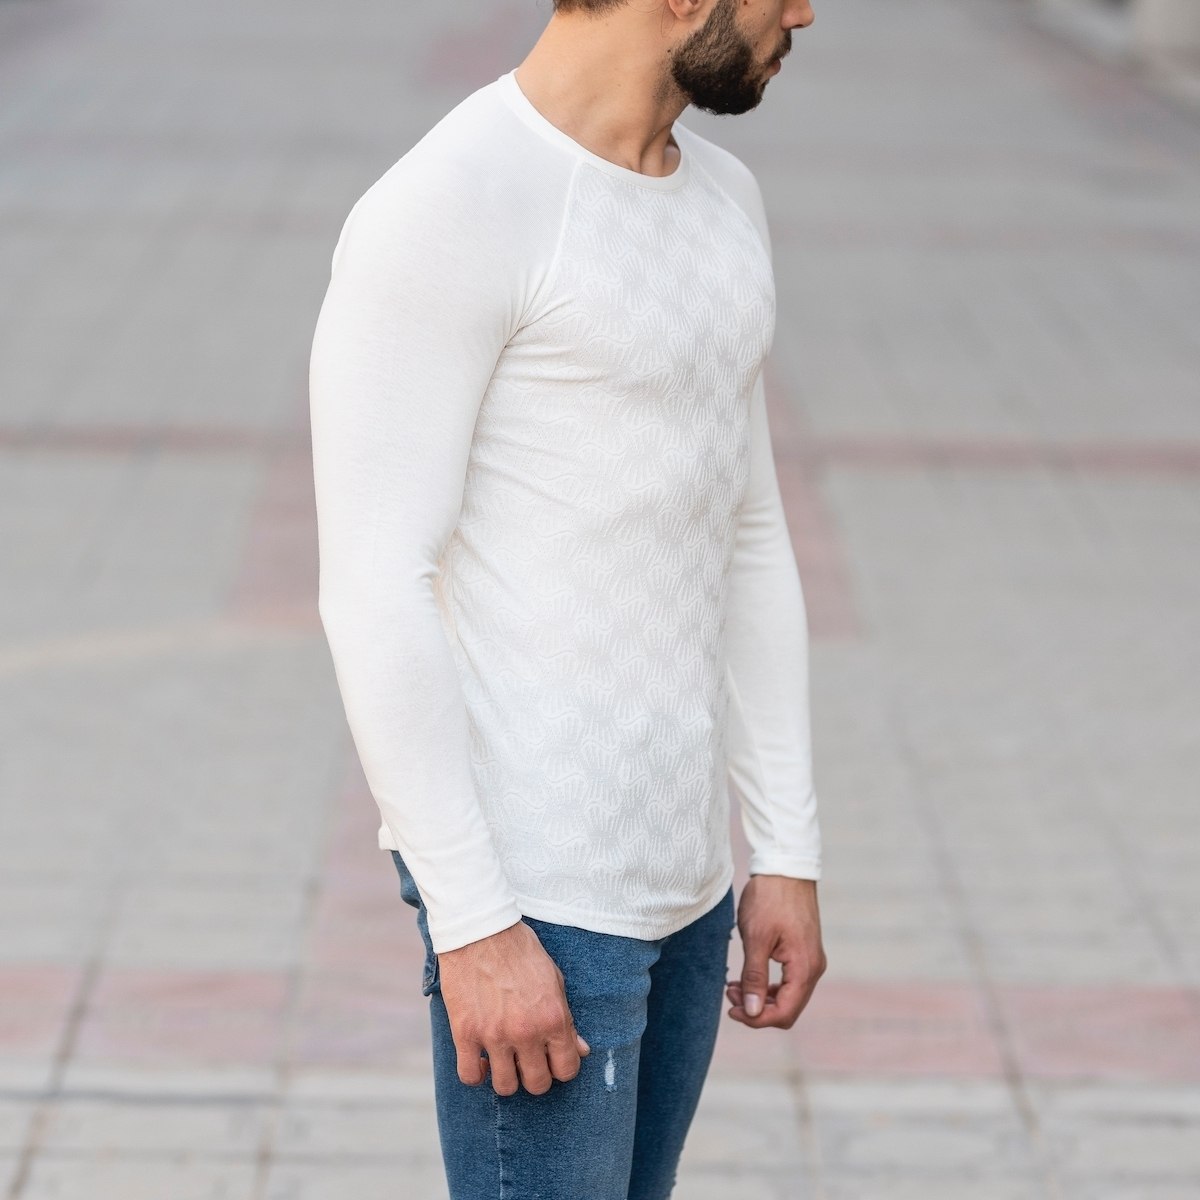 Engraved Sweatshirt In White - 3